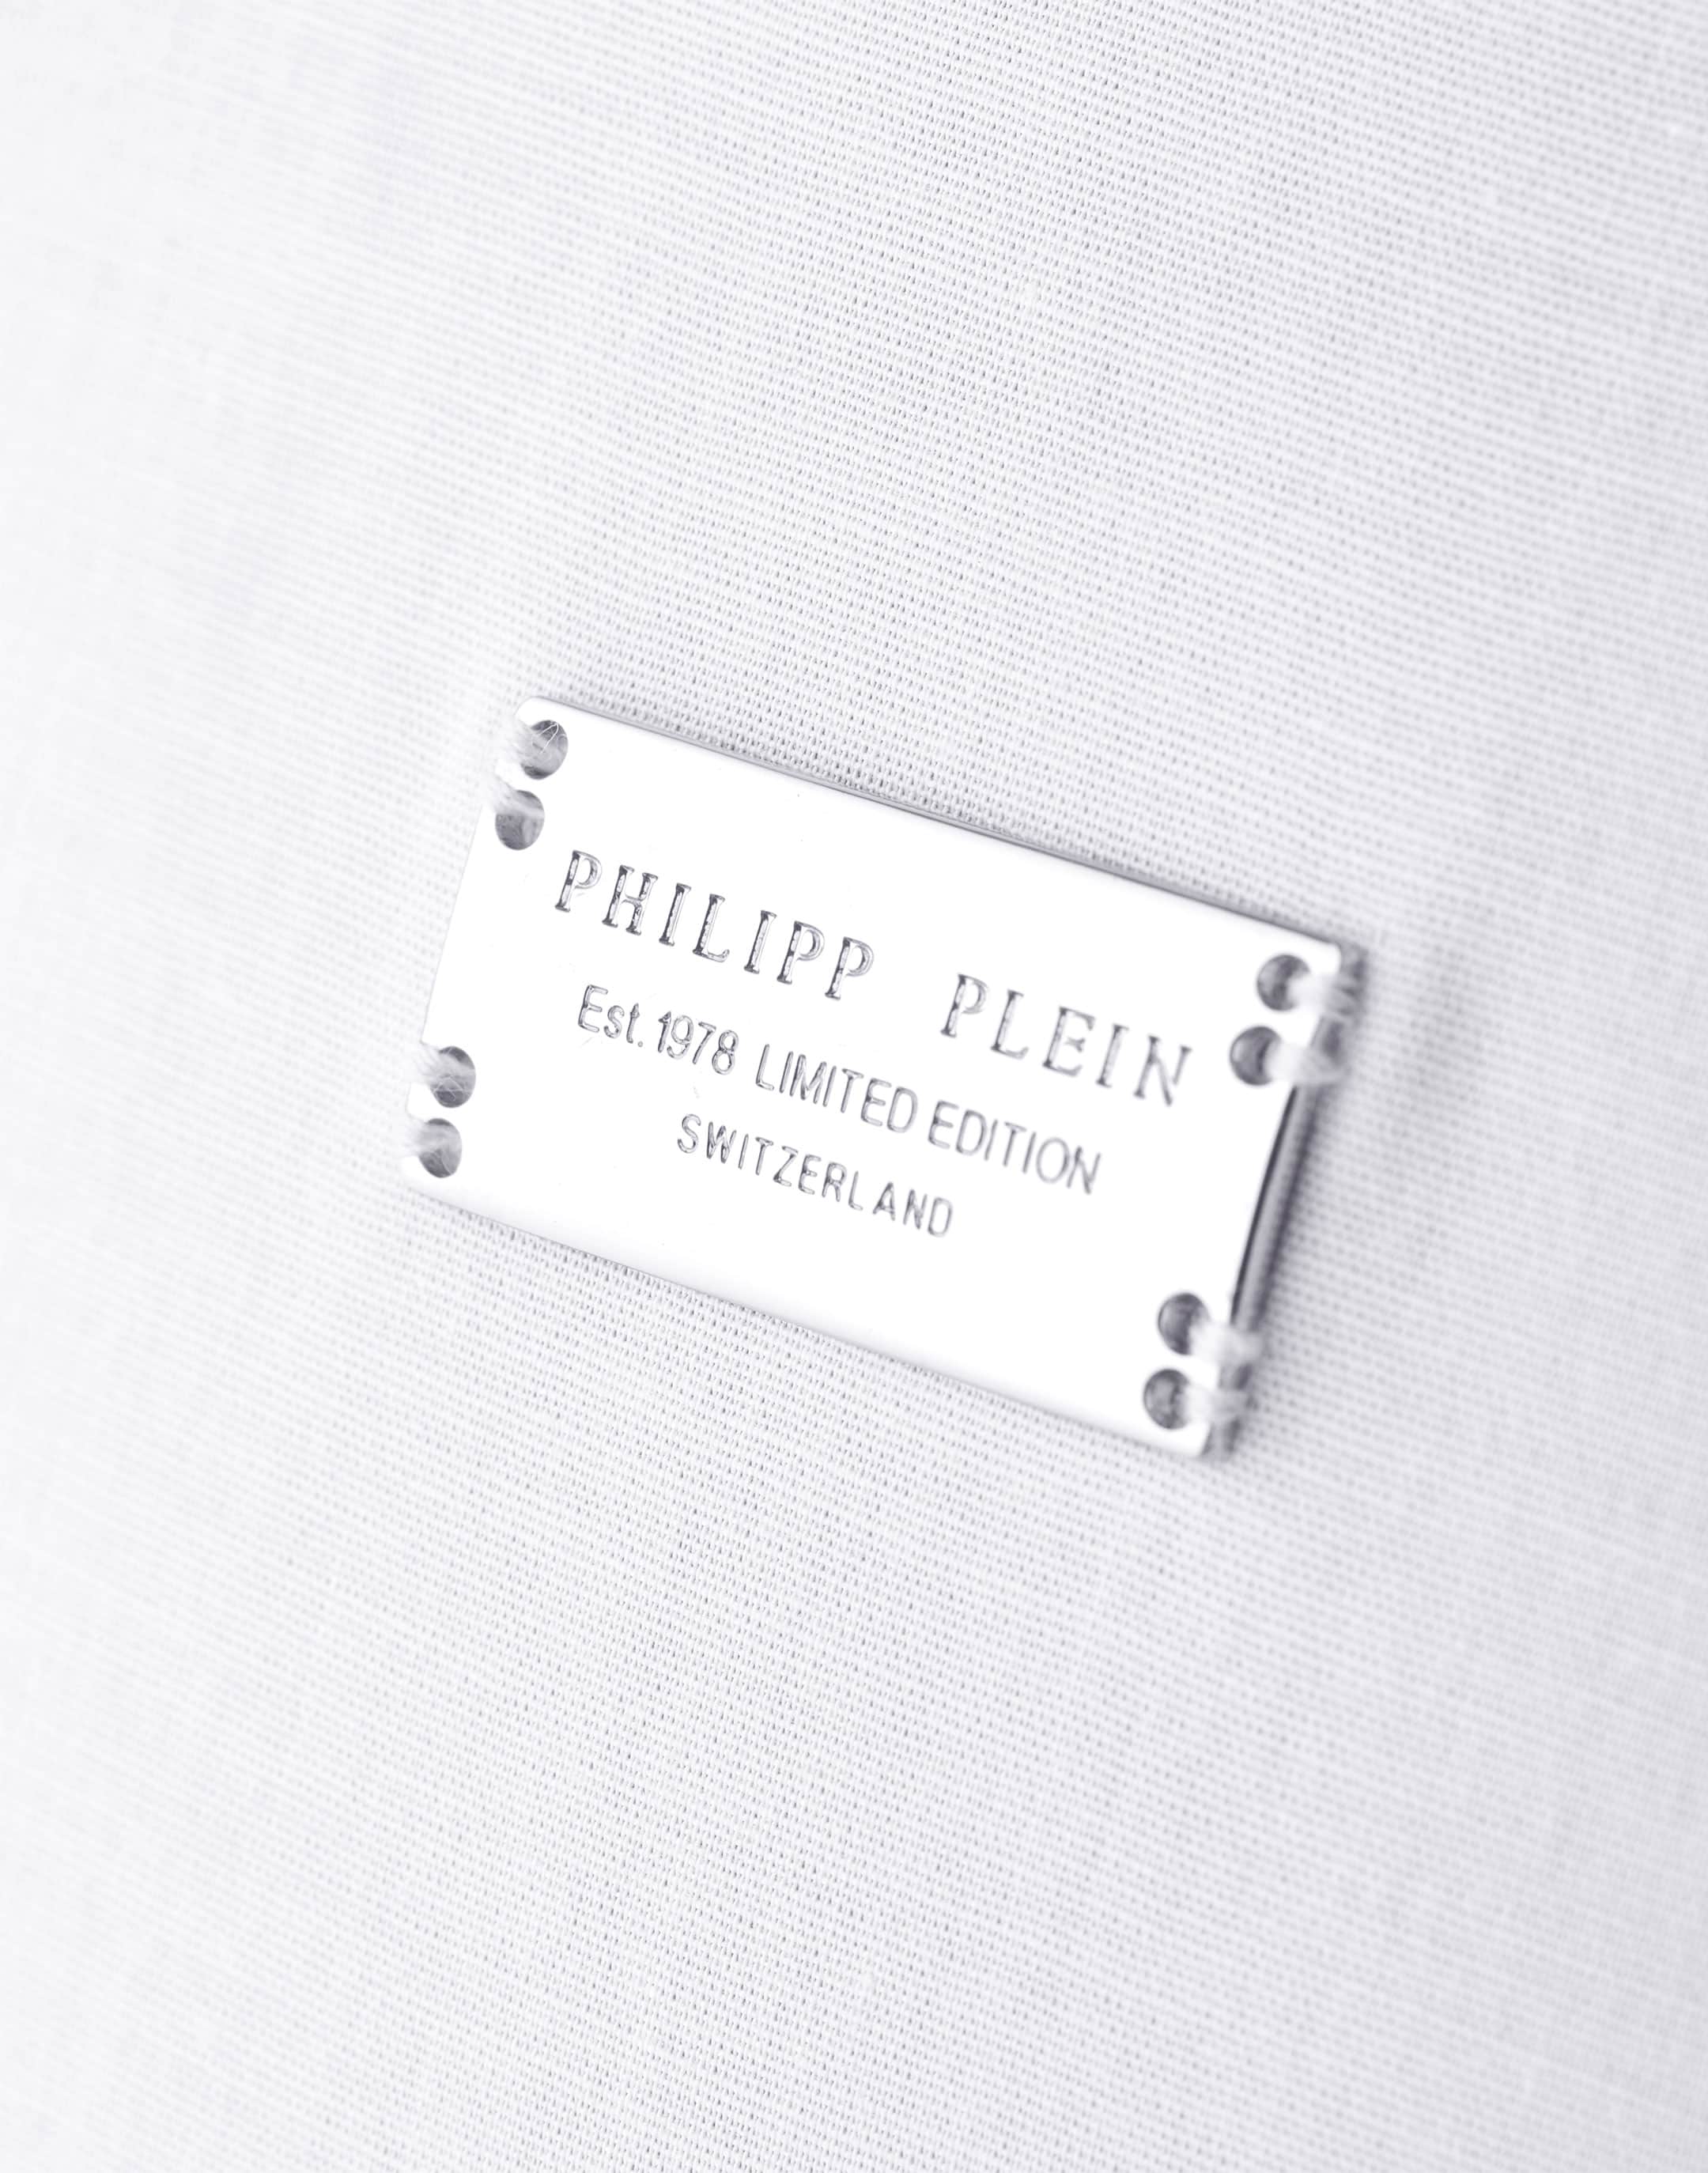 Philipp Plein logo-plaque Metallic Belt - Silver